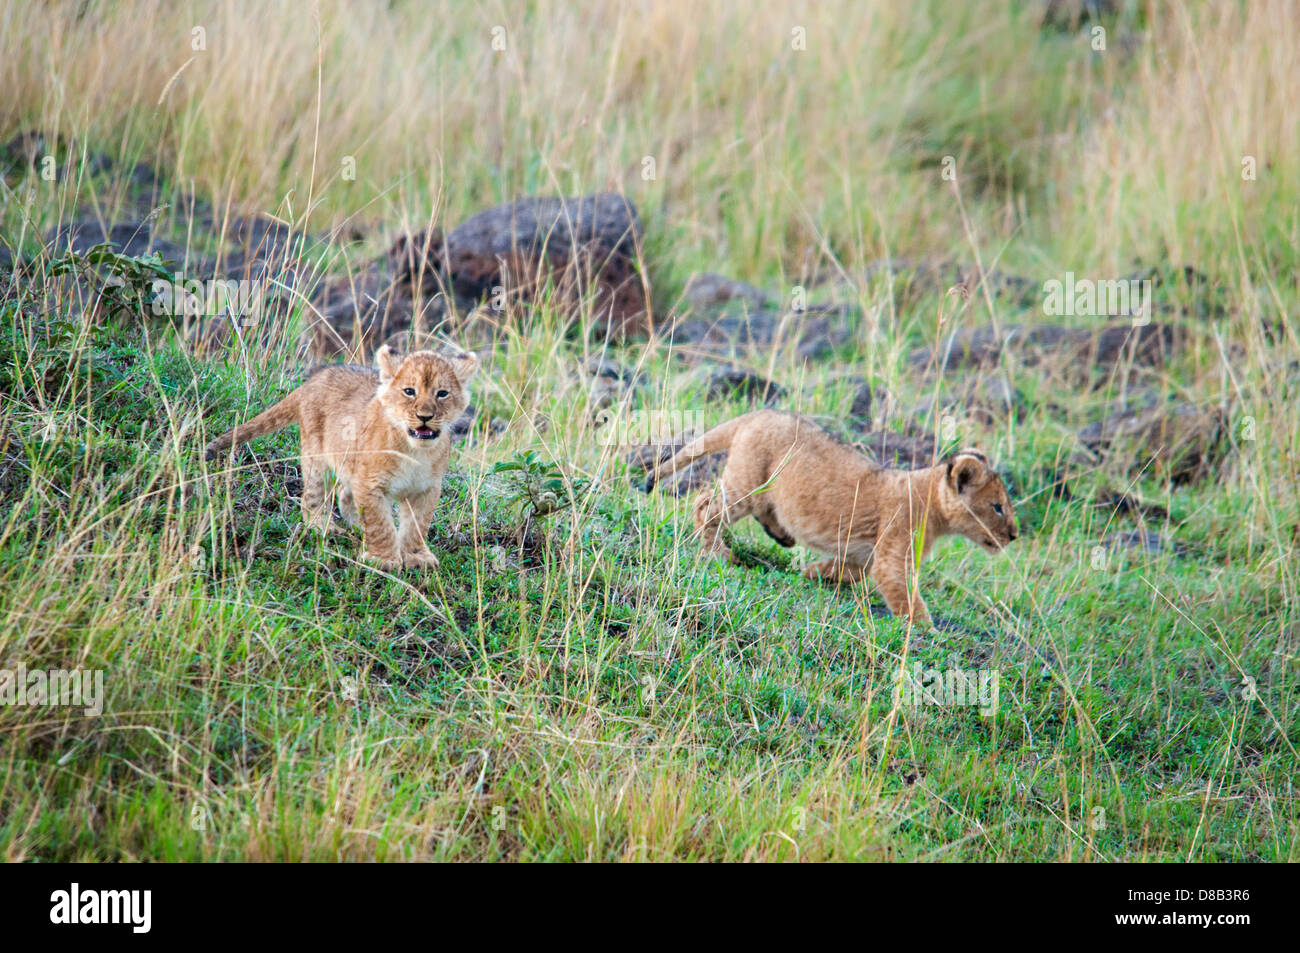 Two small Lion Cubs, Panthera leo, one crying and looking at camera, Masai Mara National Reserve, Kenya, Africa Stock Photo